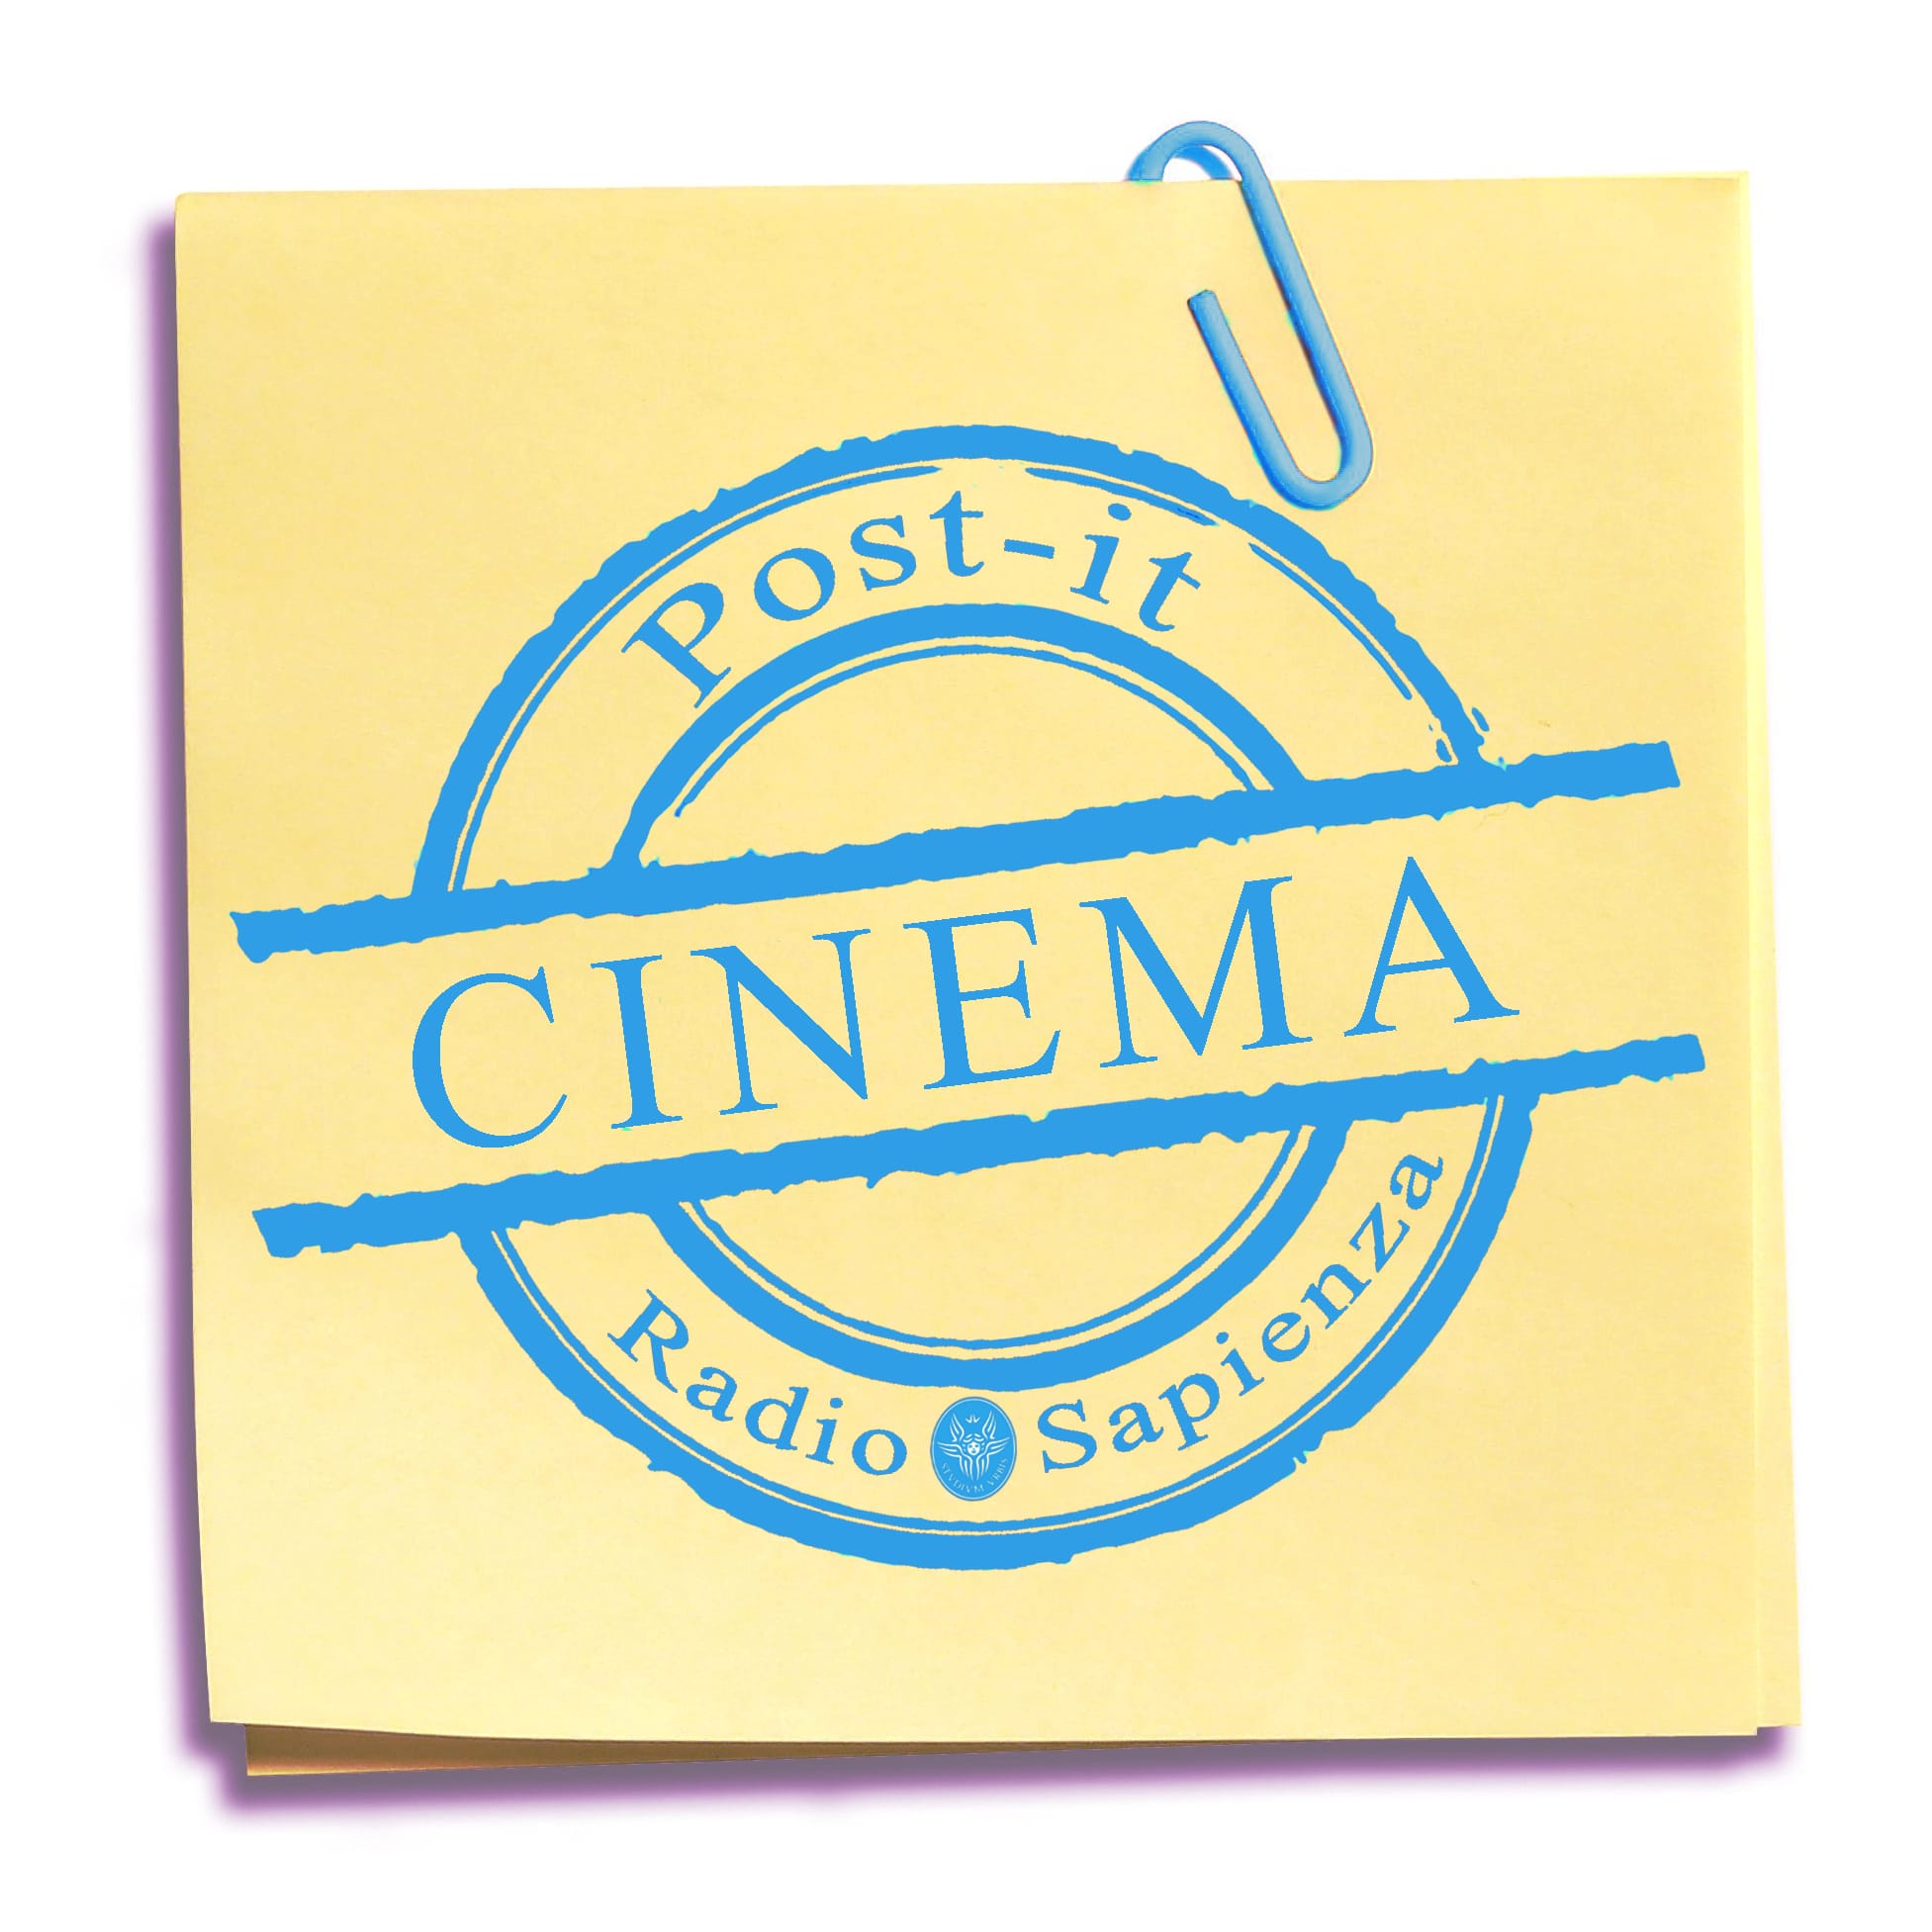 Post-it Cinema – Mercoledì 21 aprile